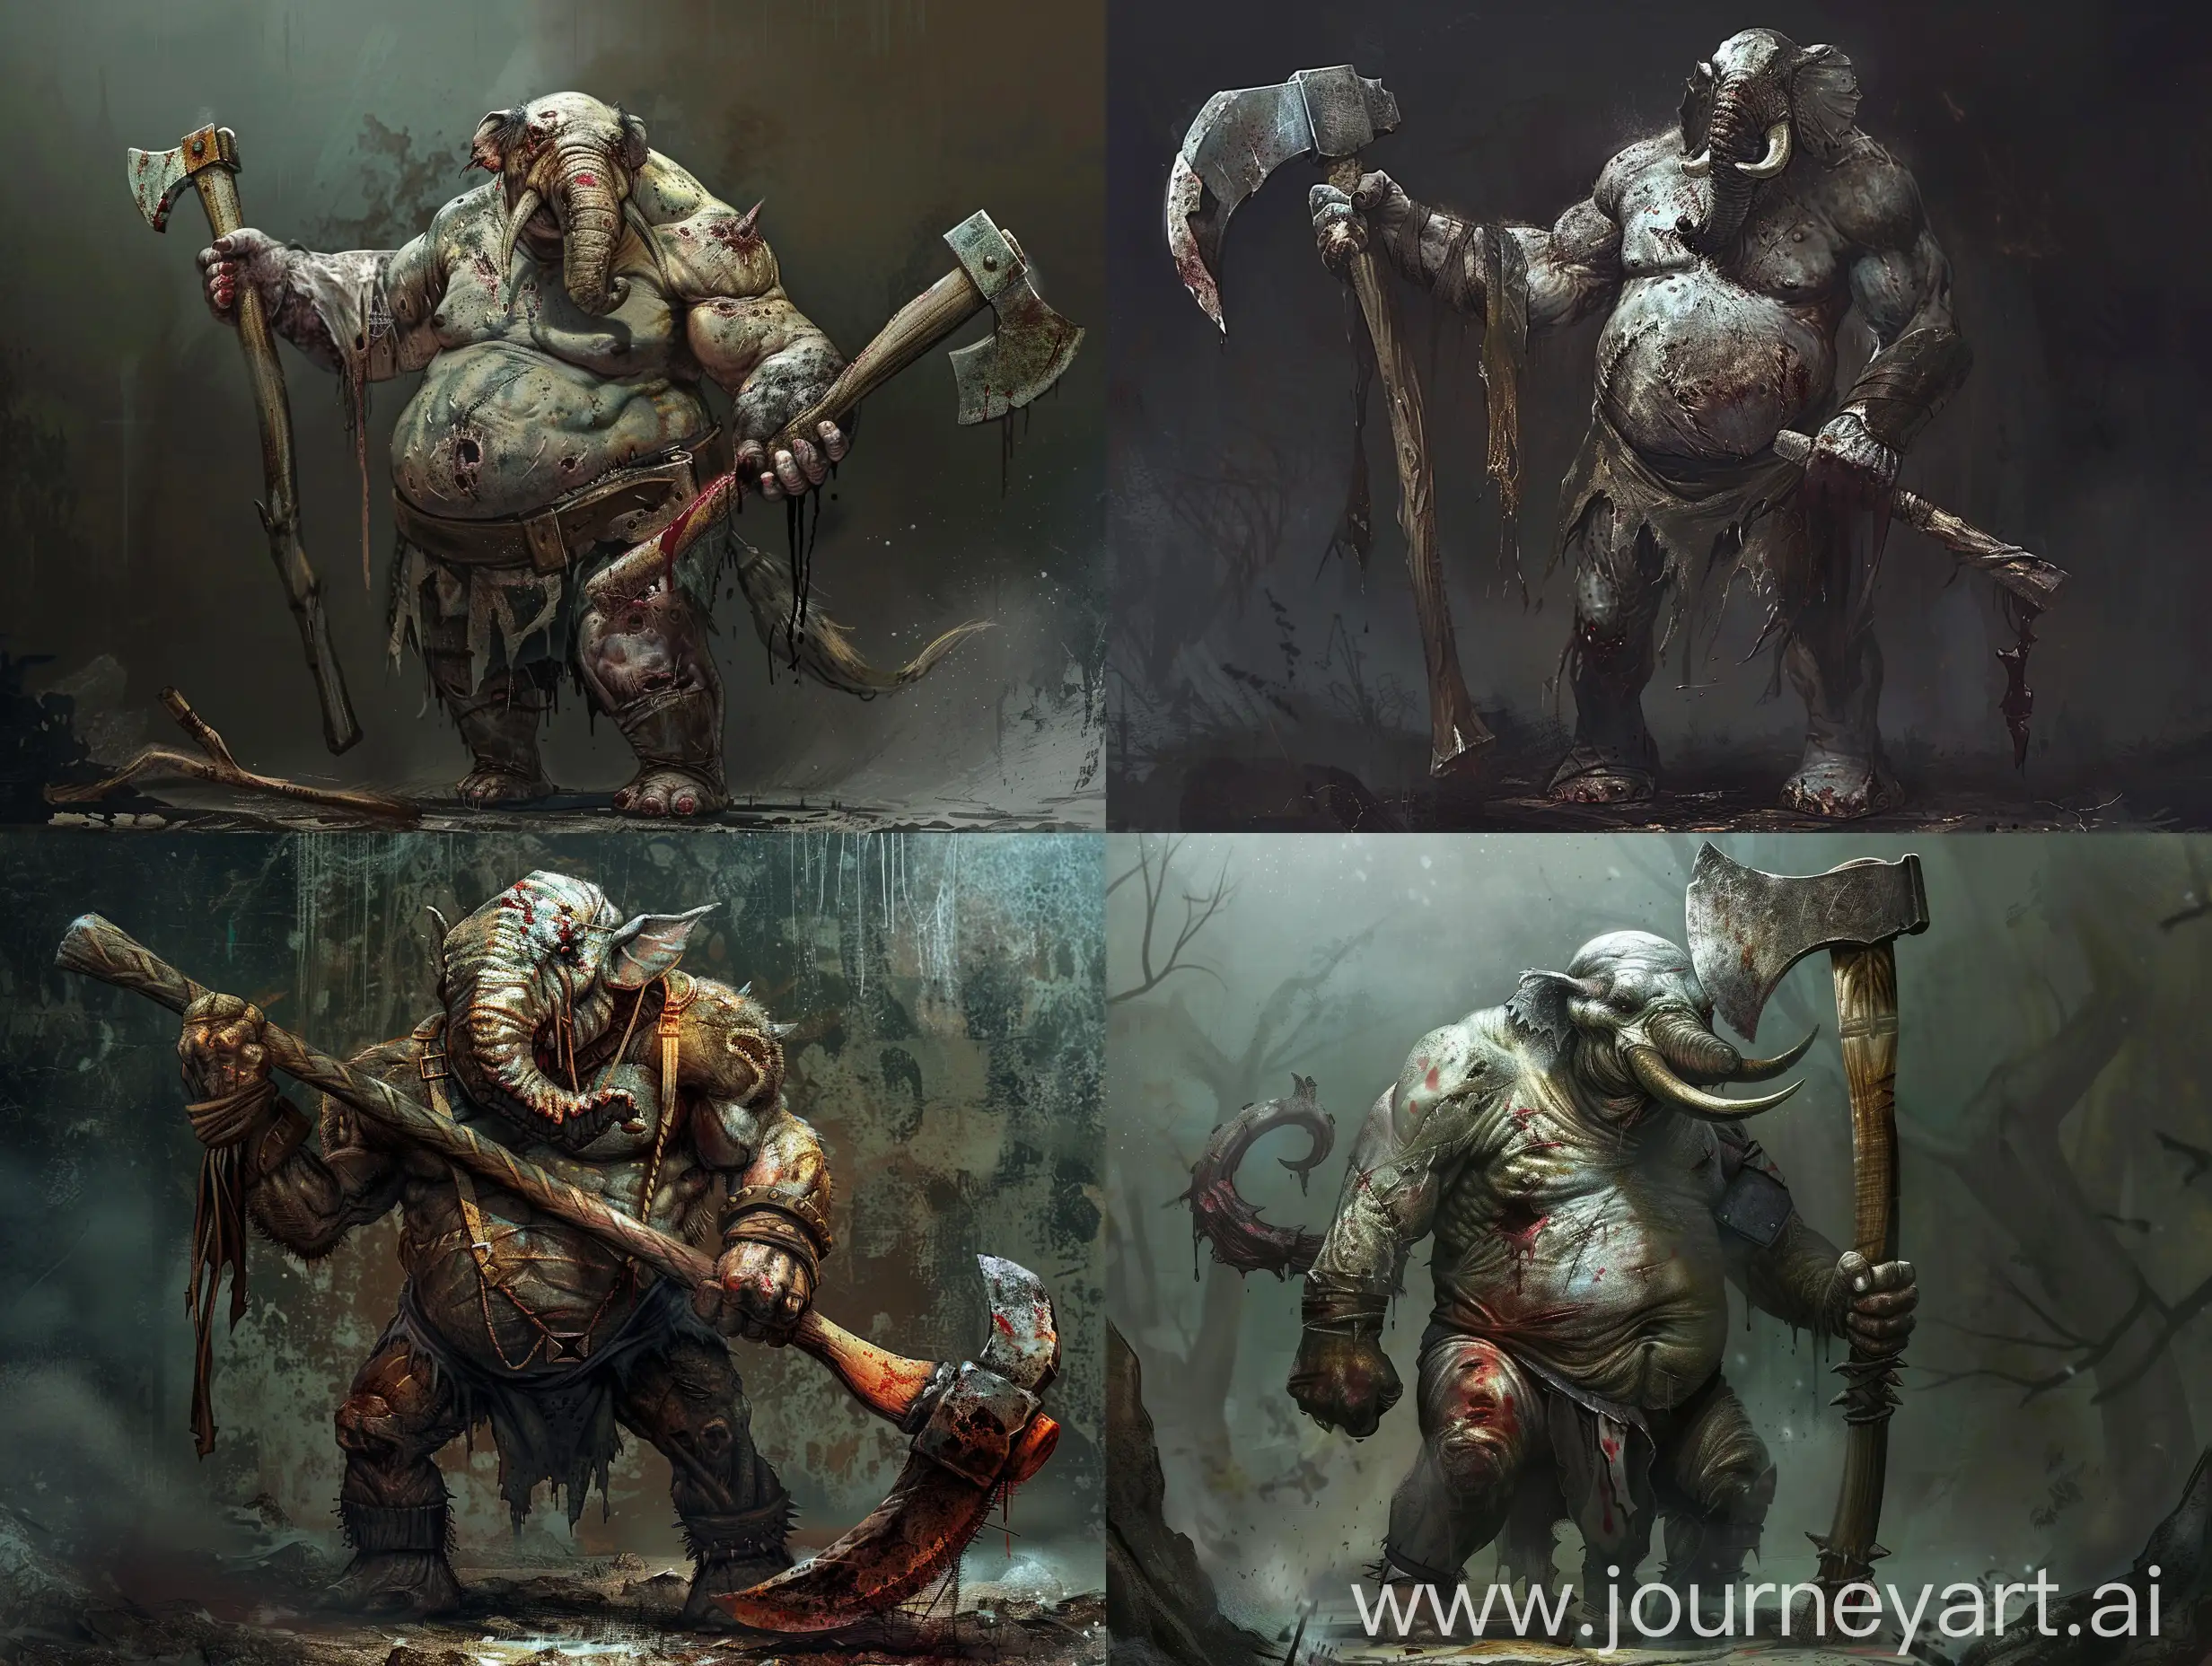 Giant-Demonic-Elephant-Boss-with-Axe-Dark-Fantasy-Concept-Art